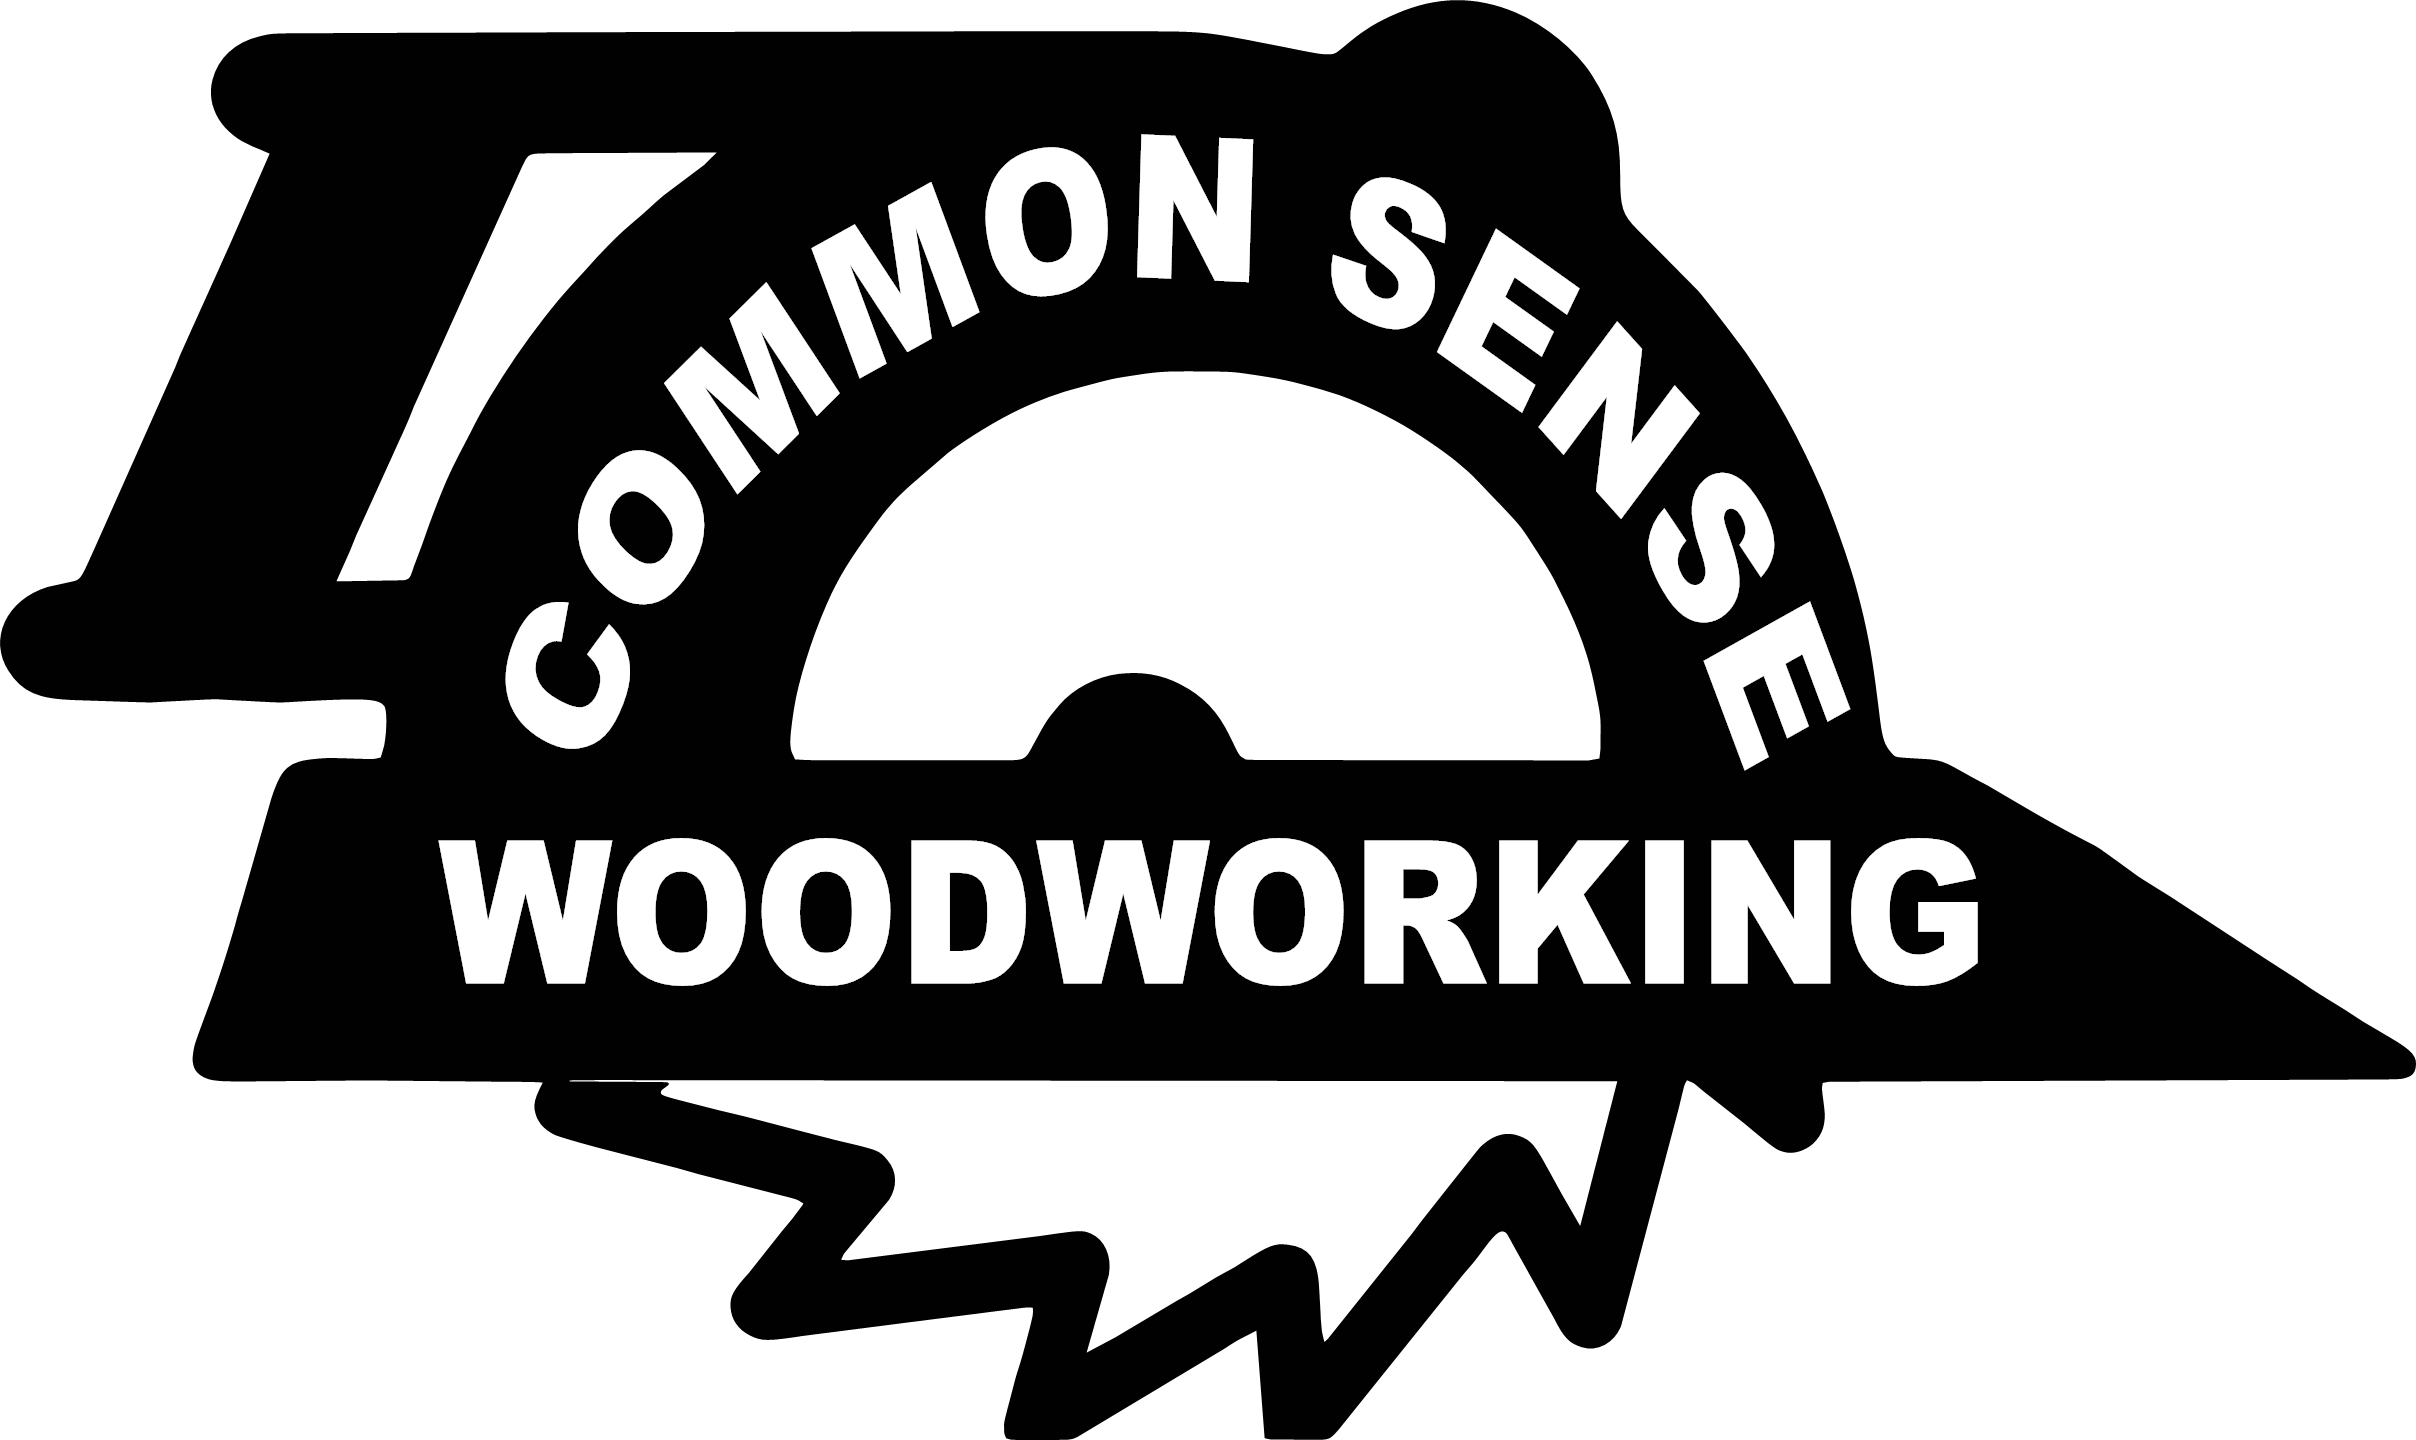 Common Sense woodworking logo.png